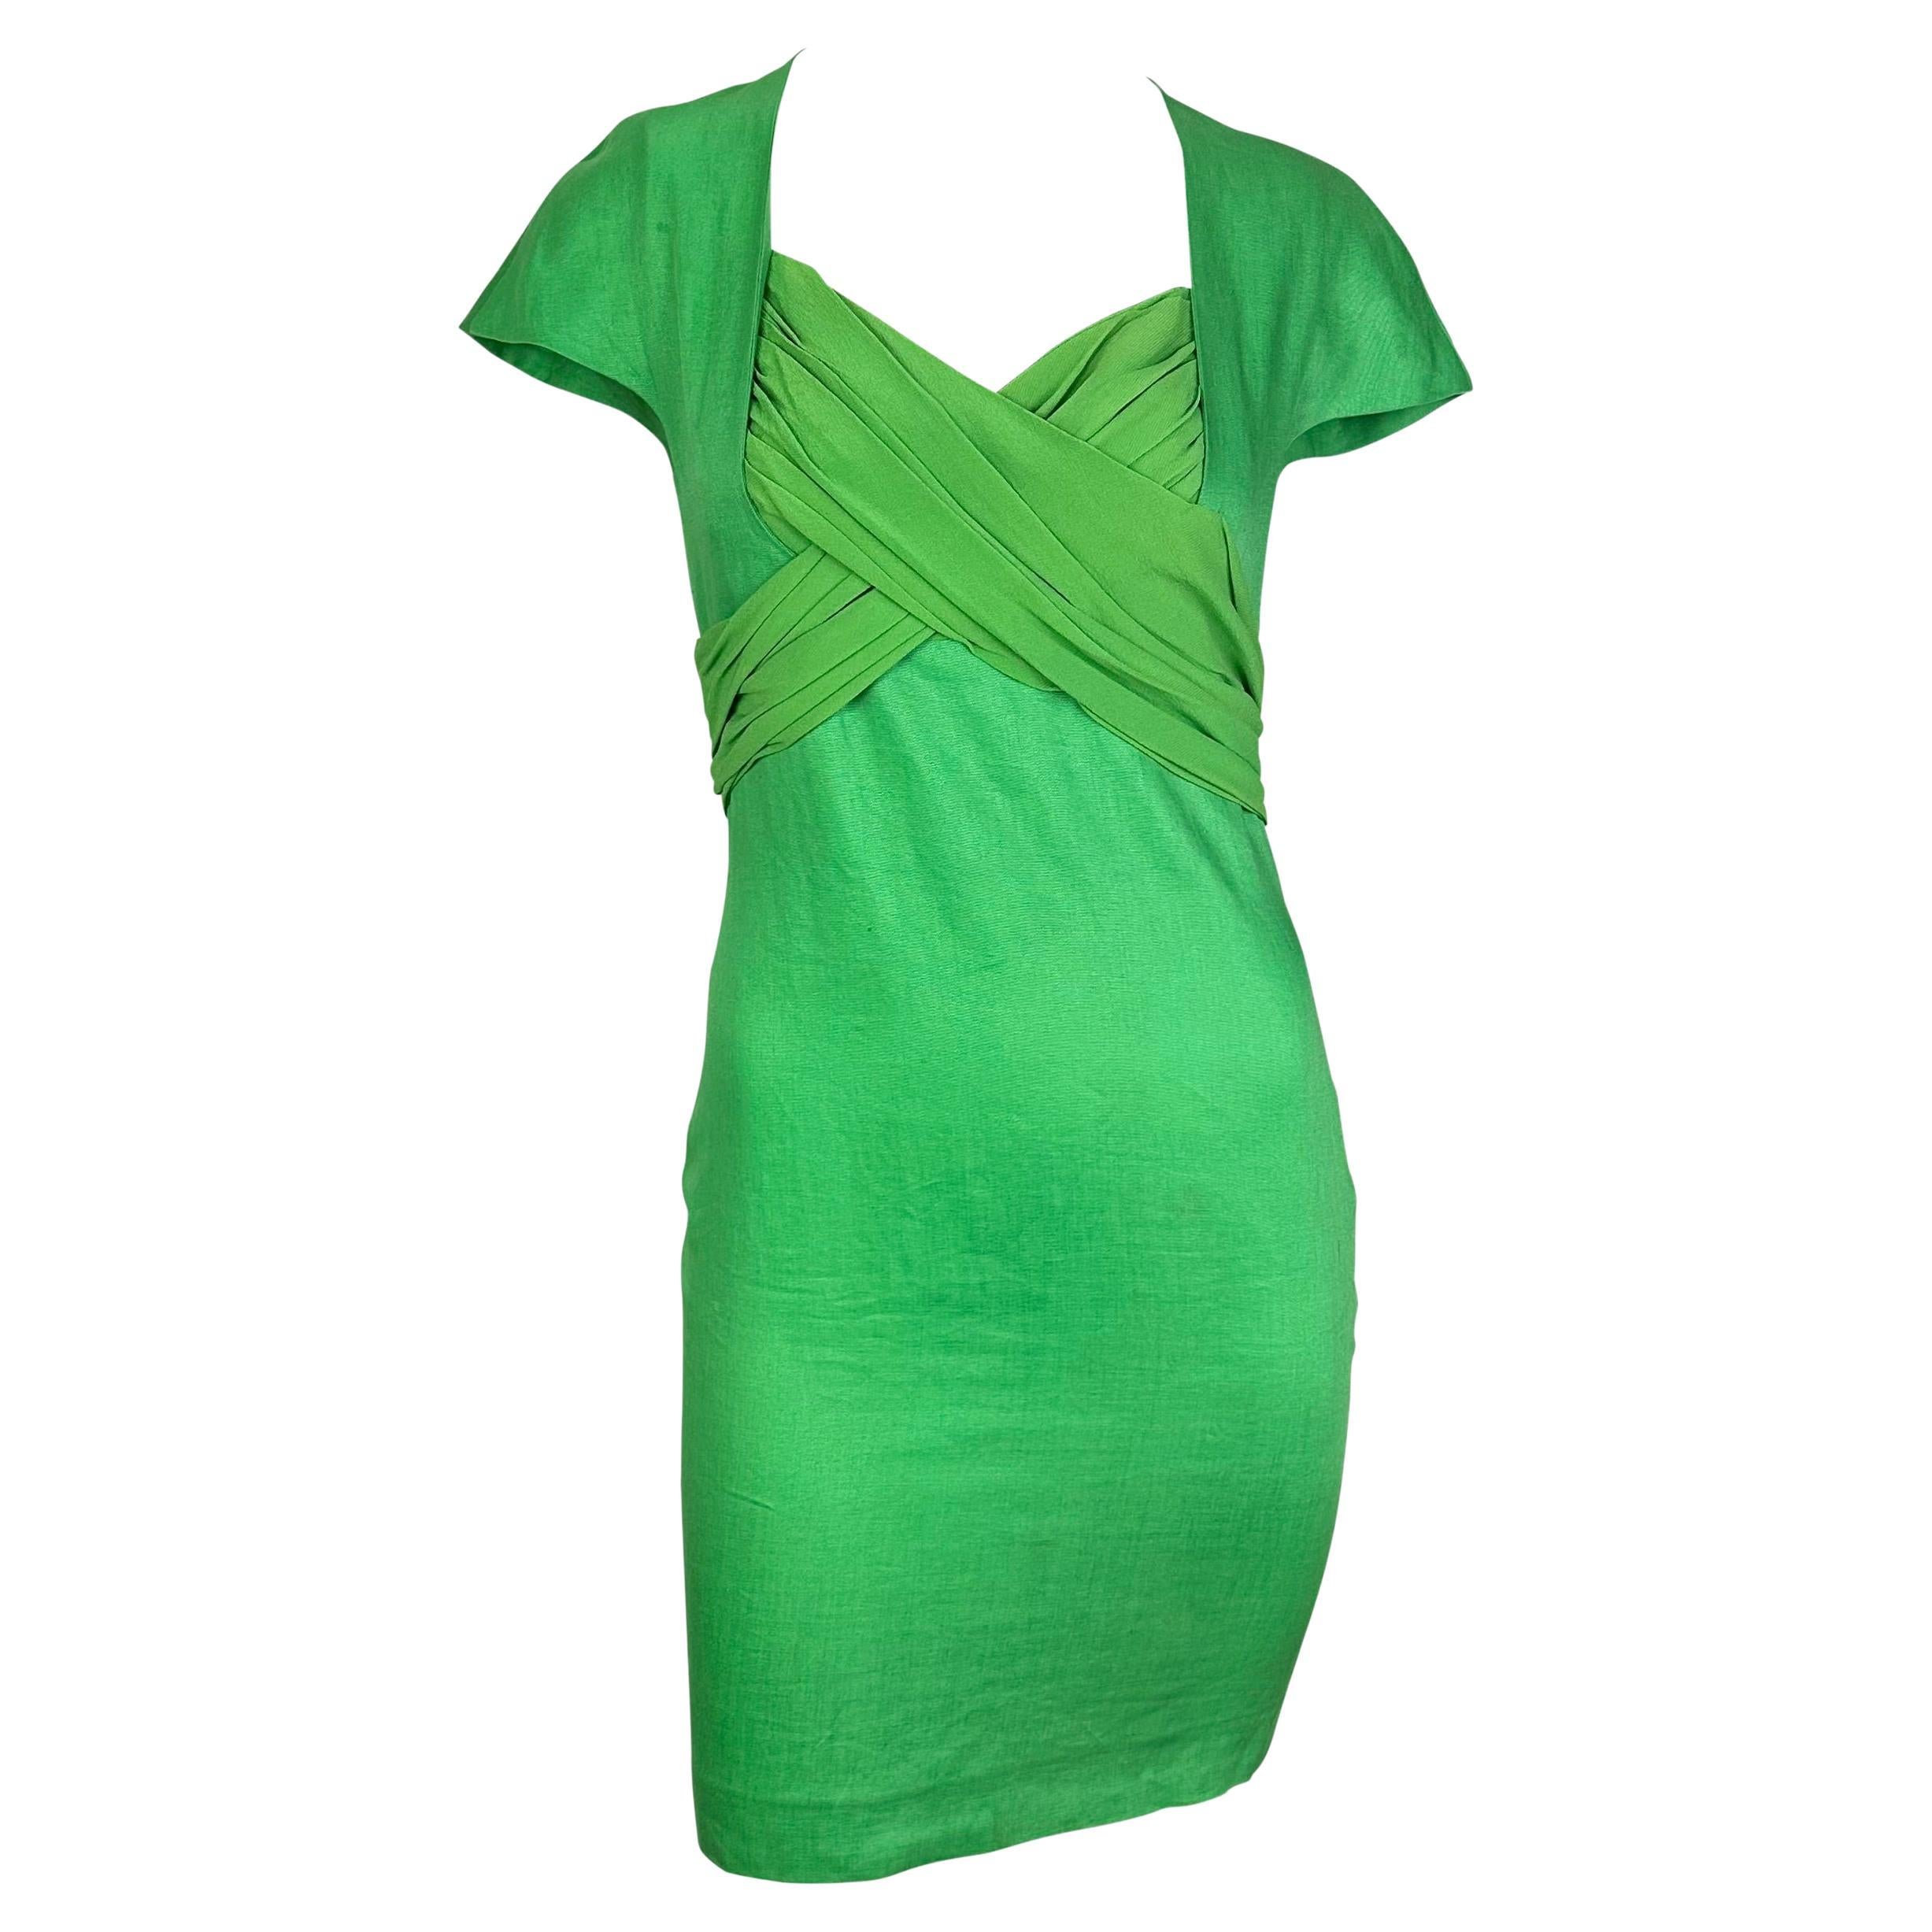 S/S 1989 Gianni Versace Runway Bright Green Linen Chiffon Tie Runway Dress